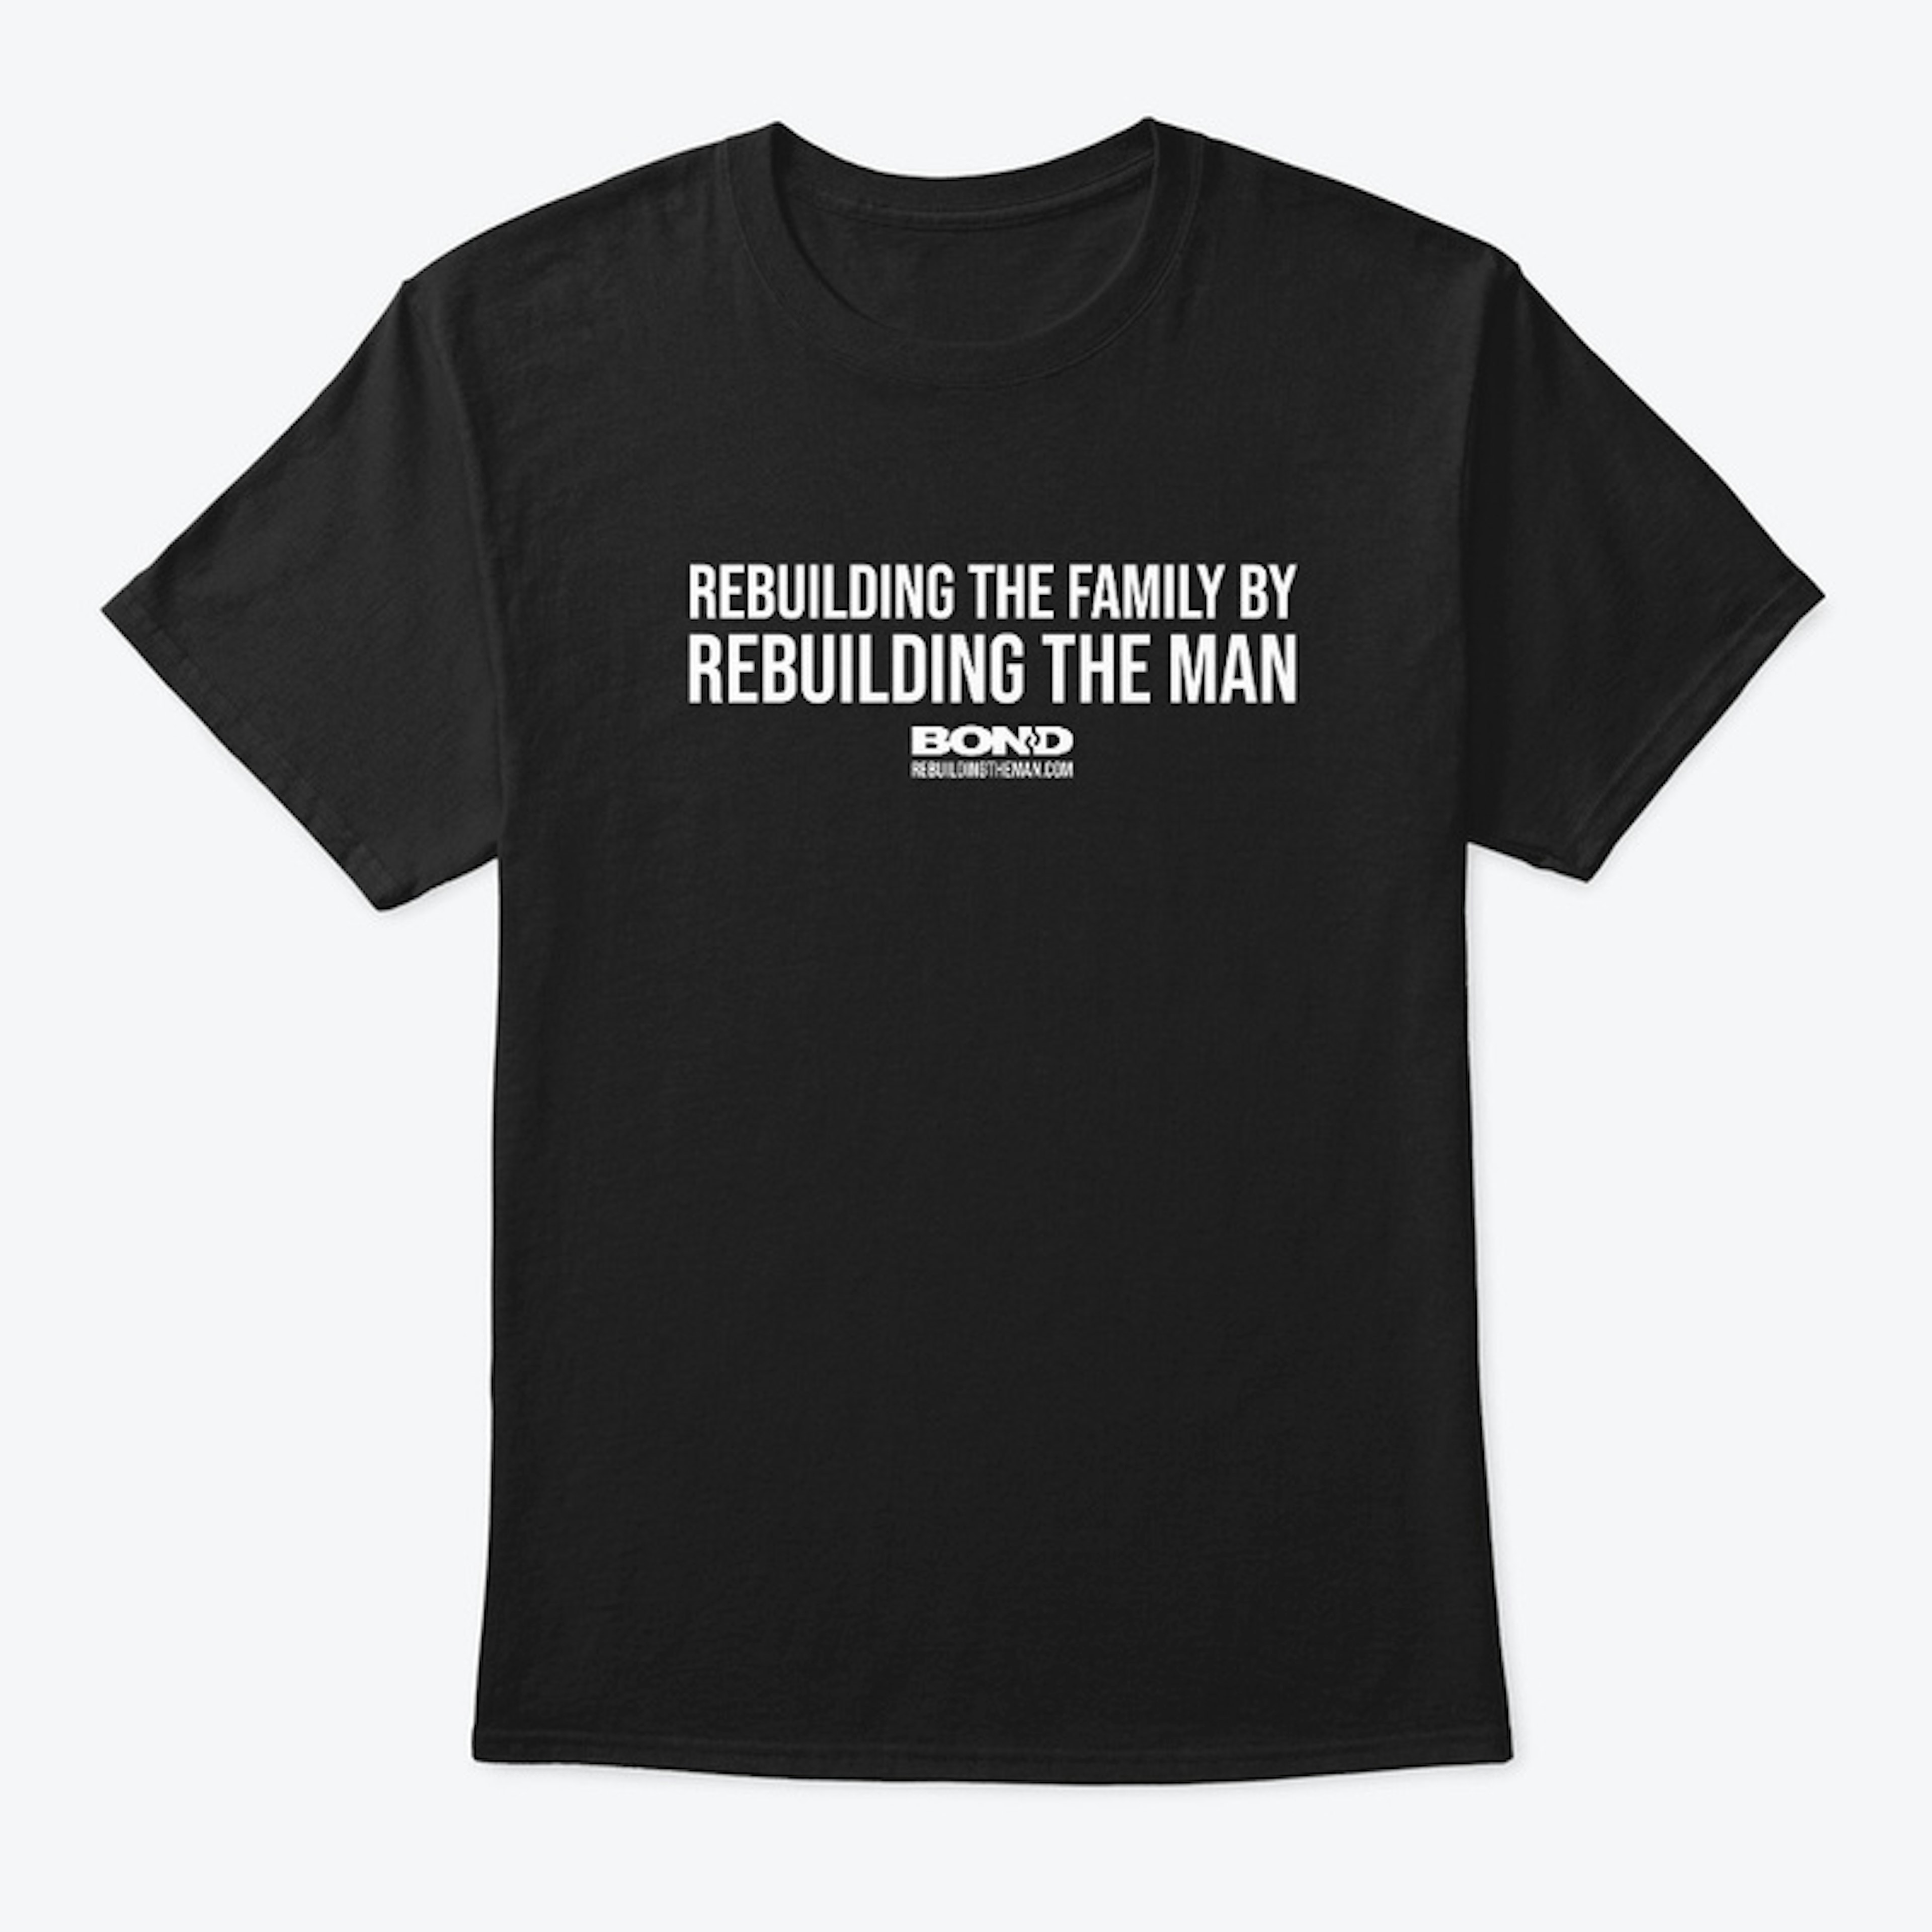 Rebuilding the Family/Man (2-line white)